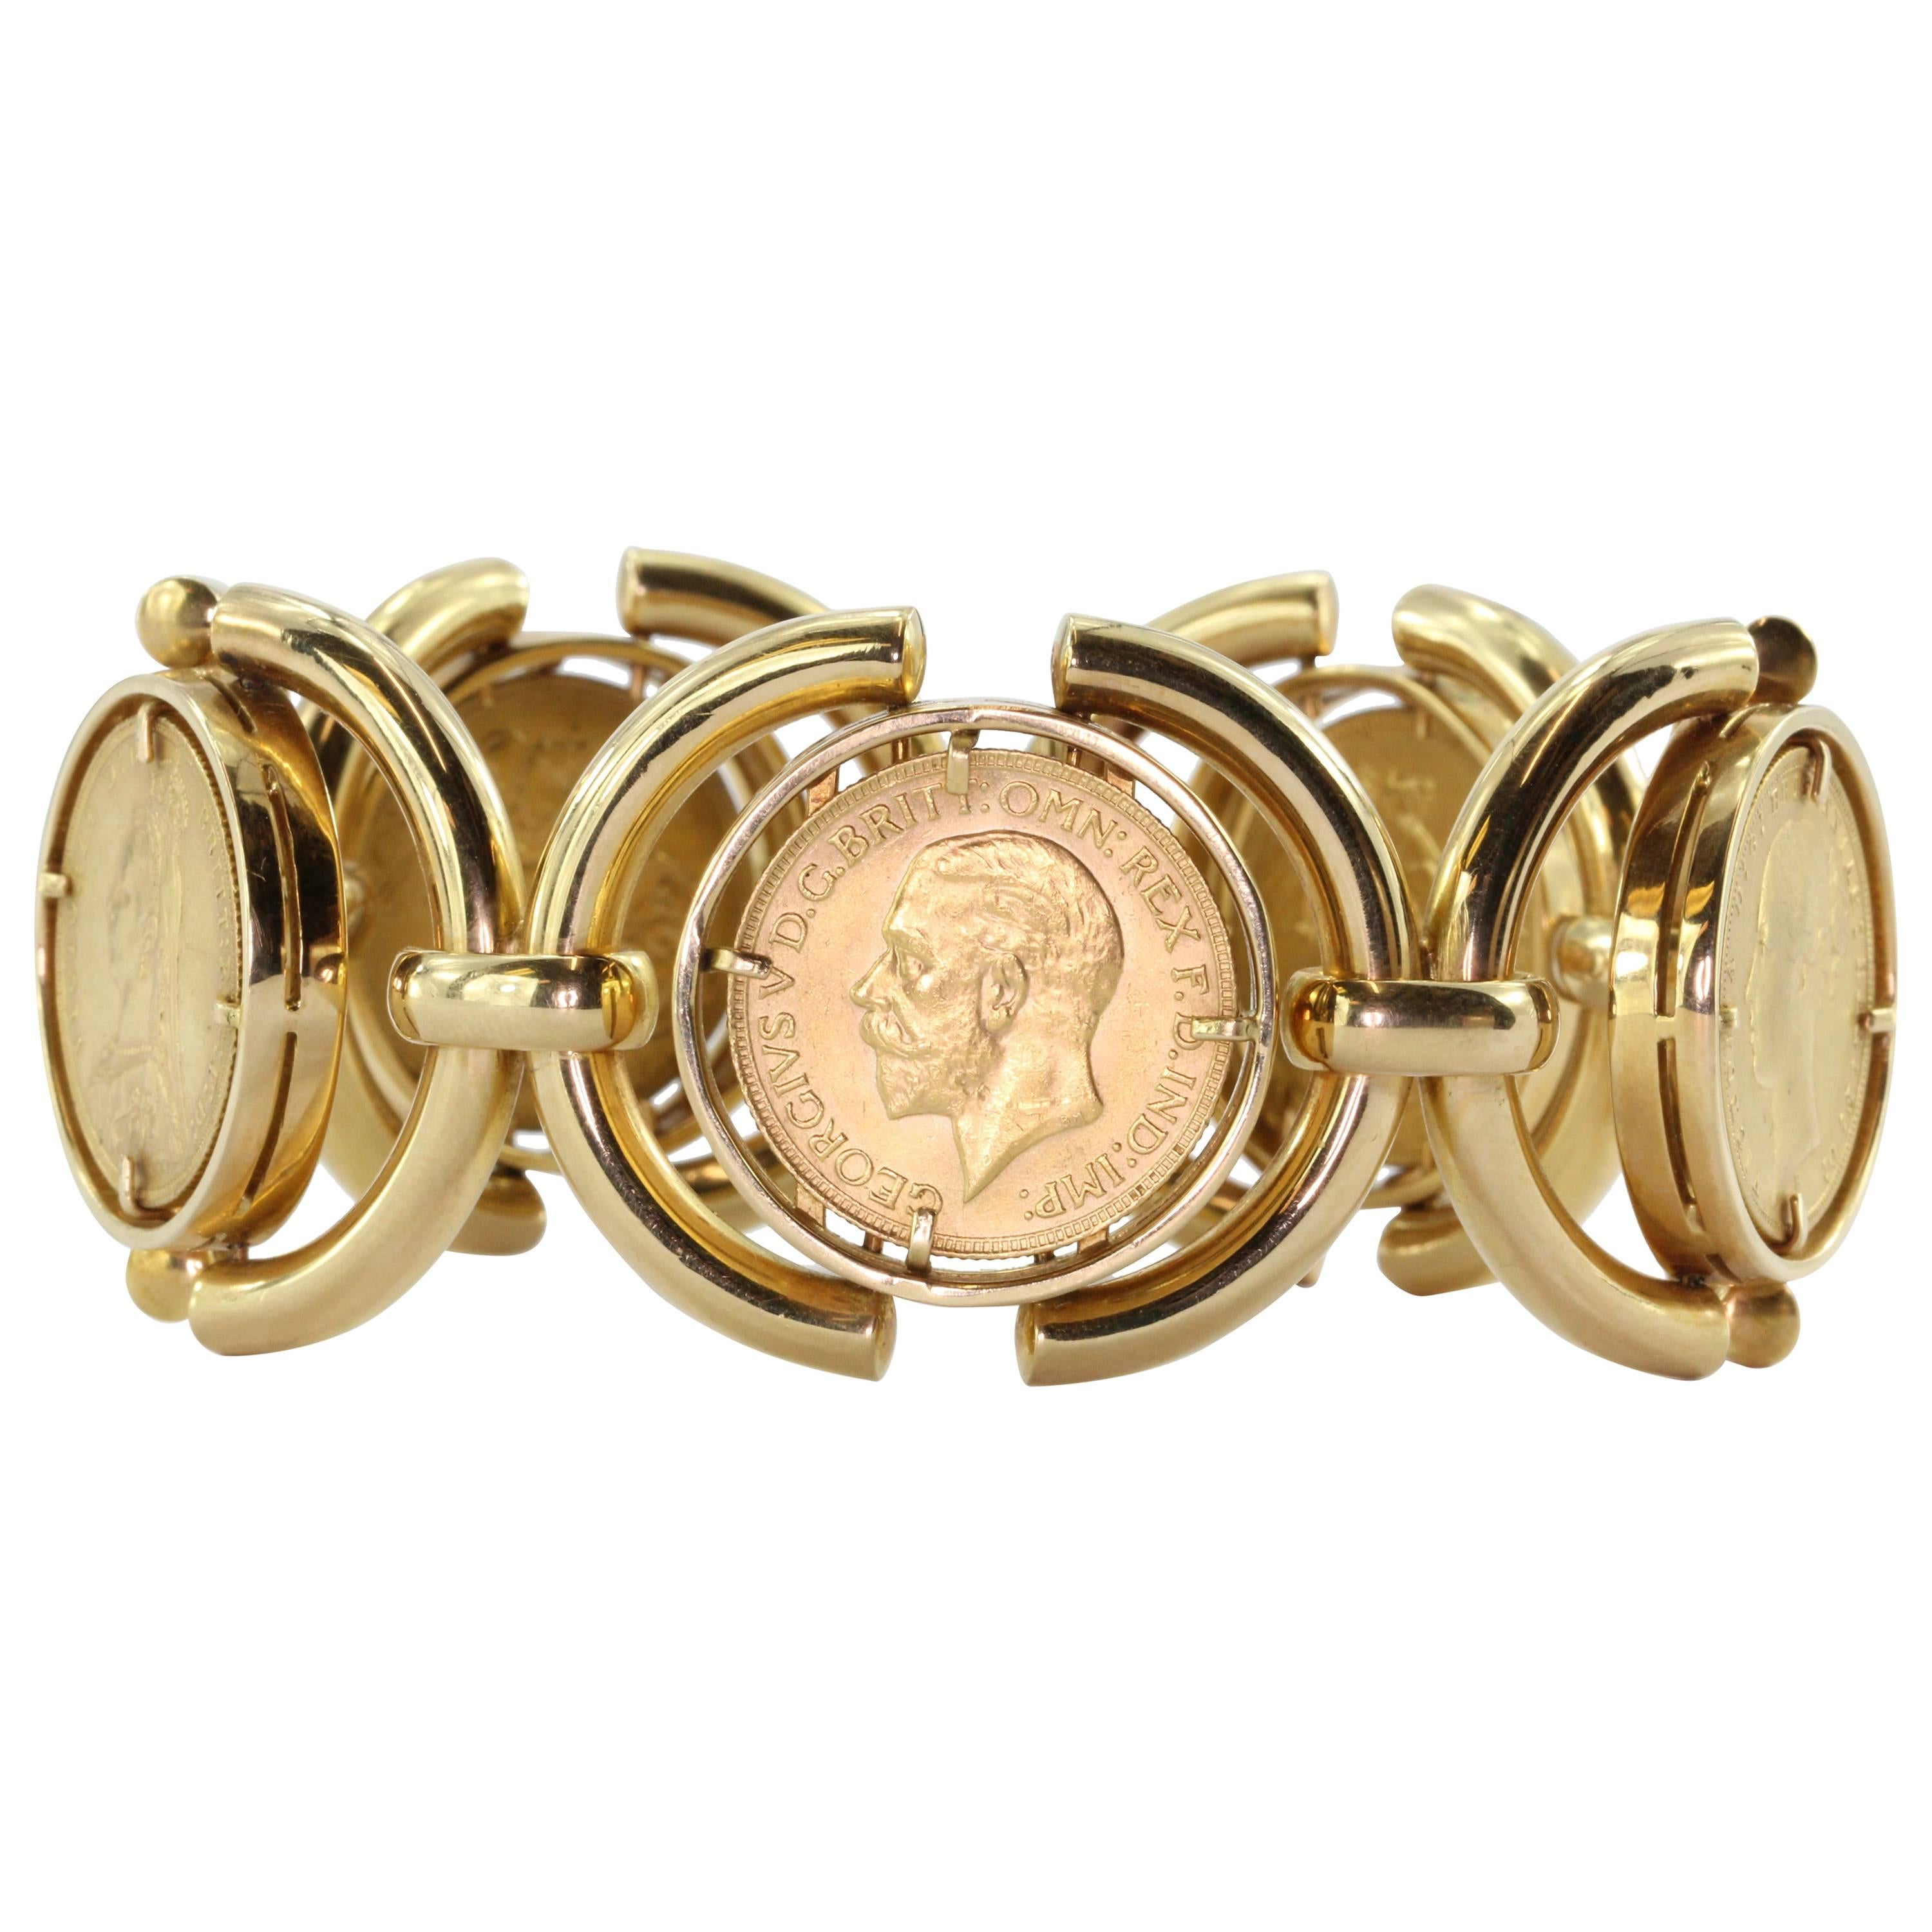 Heavy British Gold Sovereign Coin Bracelet from Verona Italy